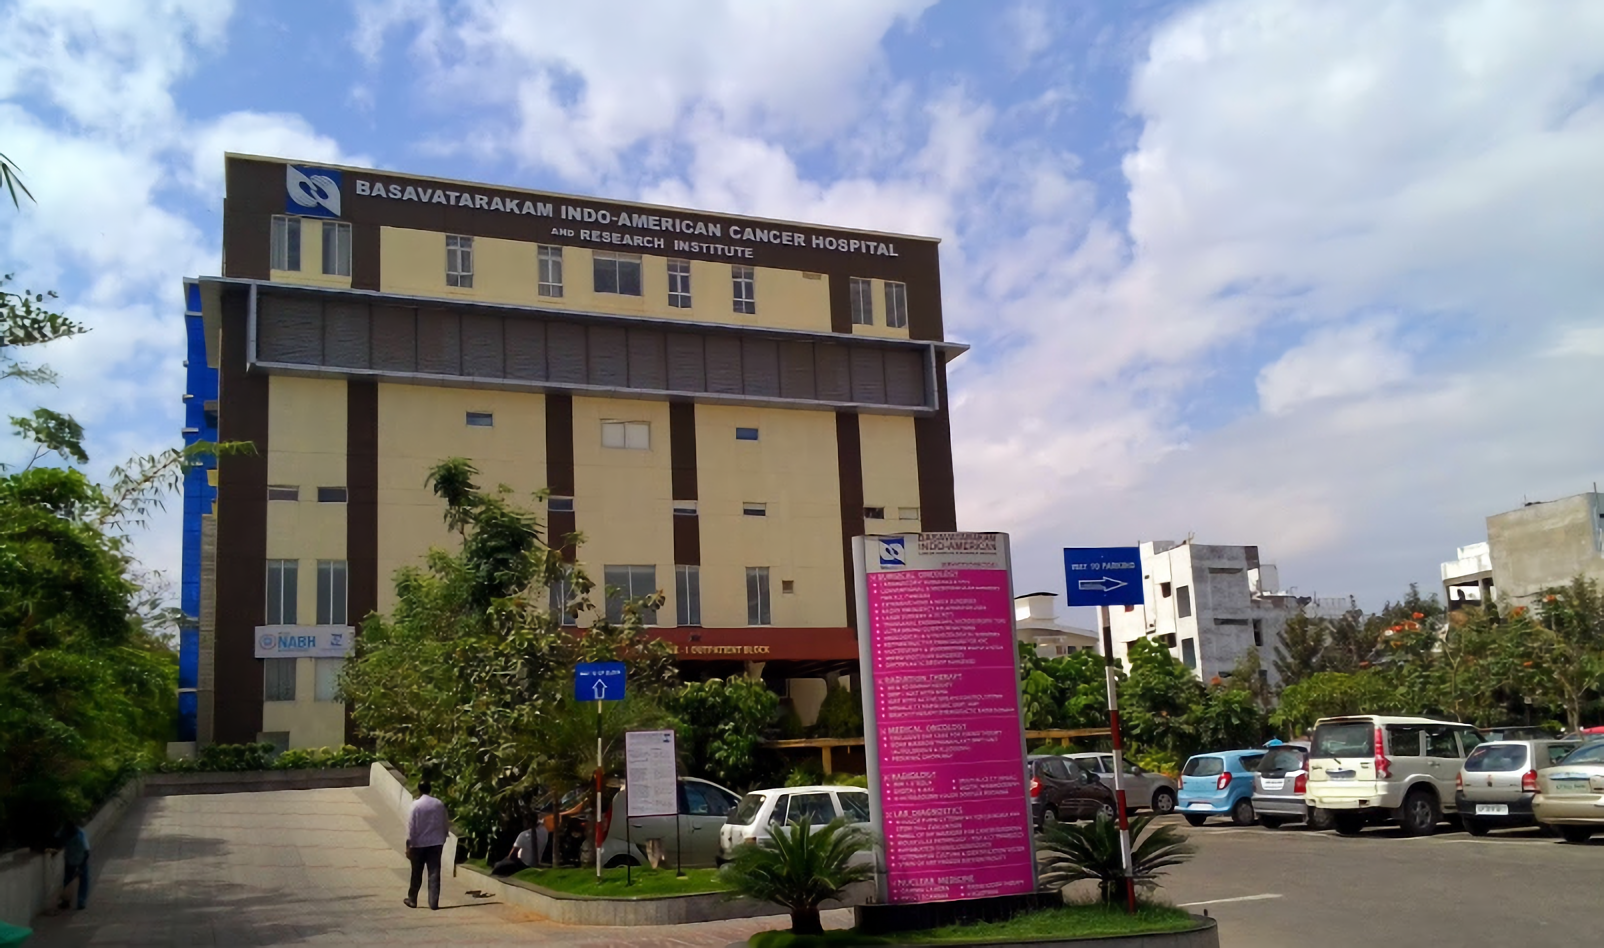 Basavatarakam Indo American Cancer Institute And Research Center